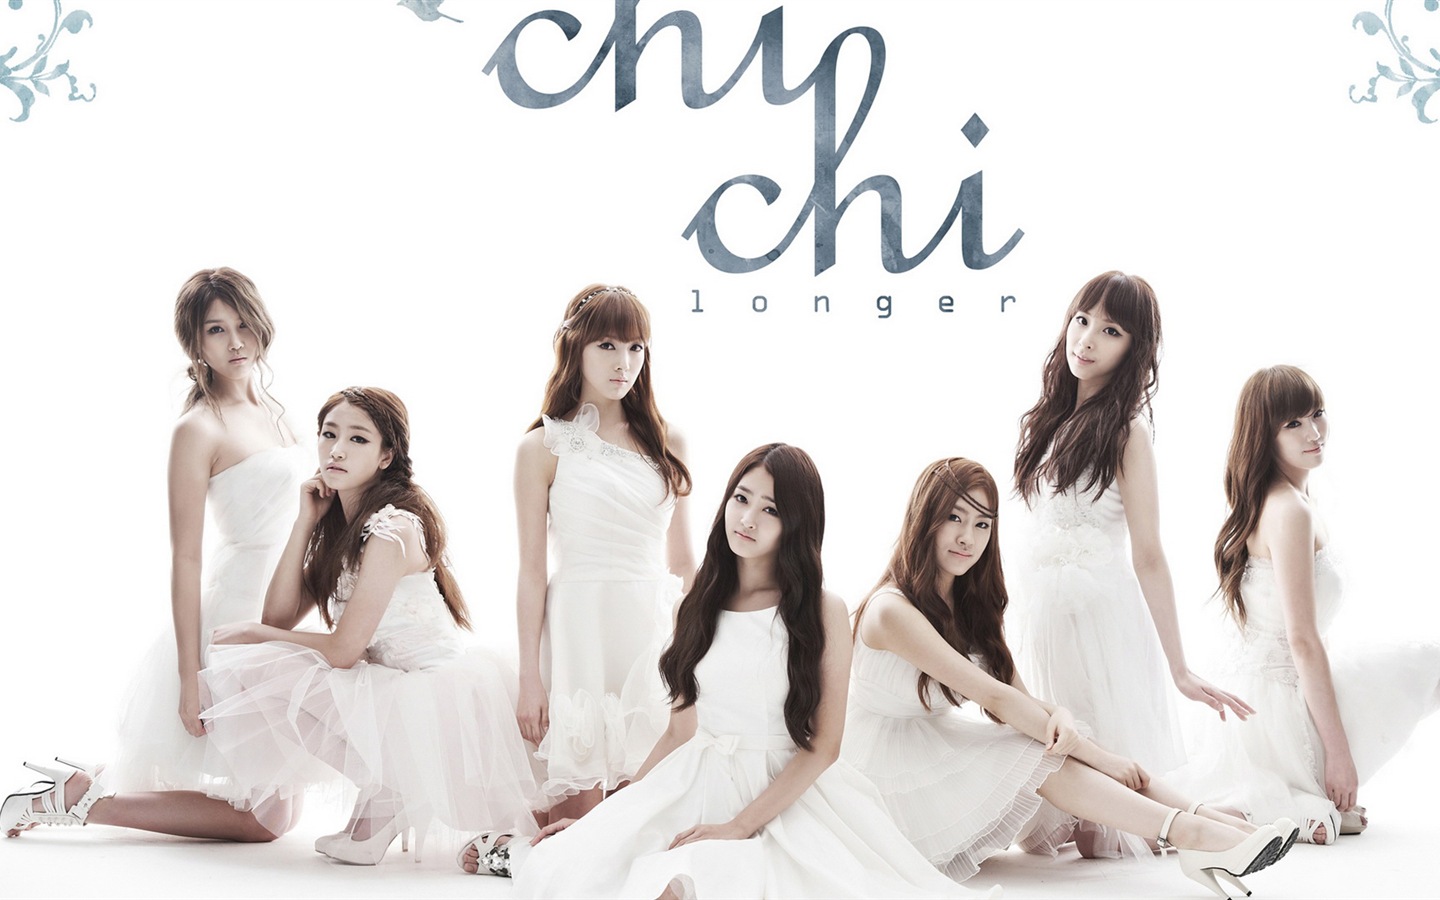 CHI CHI Korean music girl group HD Wallpapers #1 - 1440x900